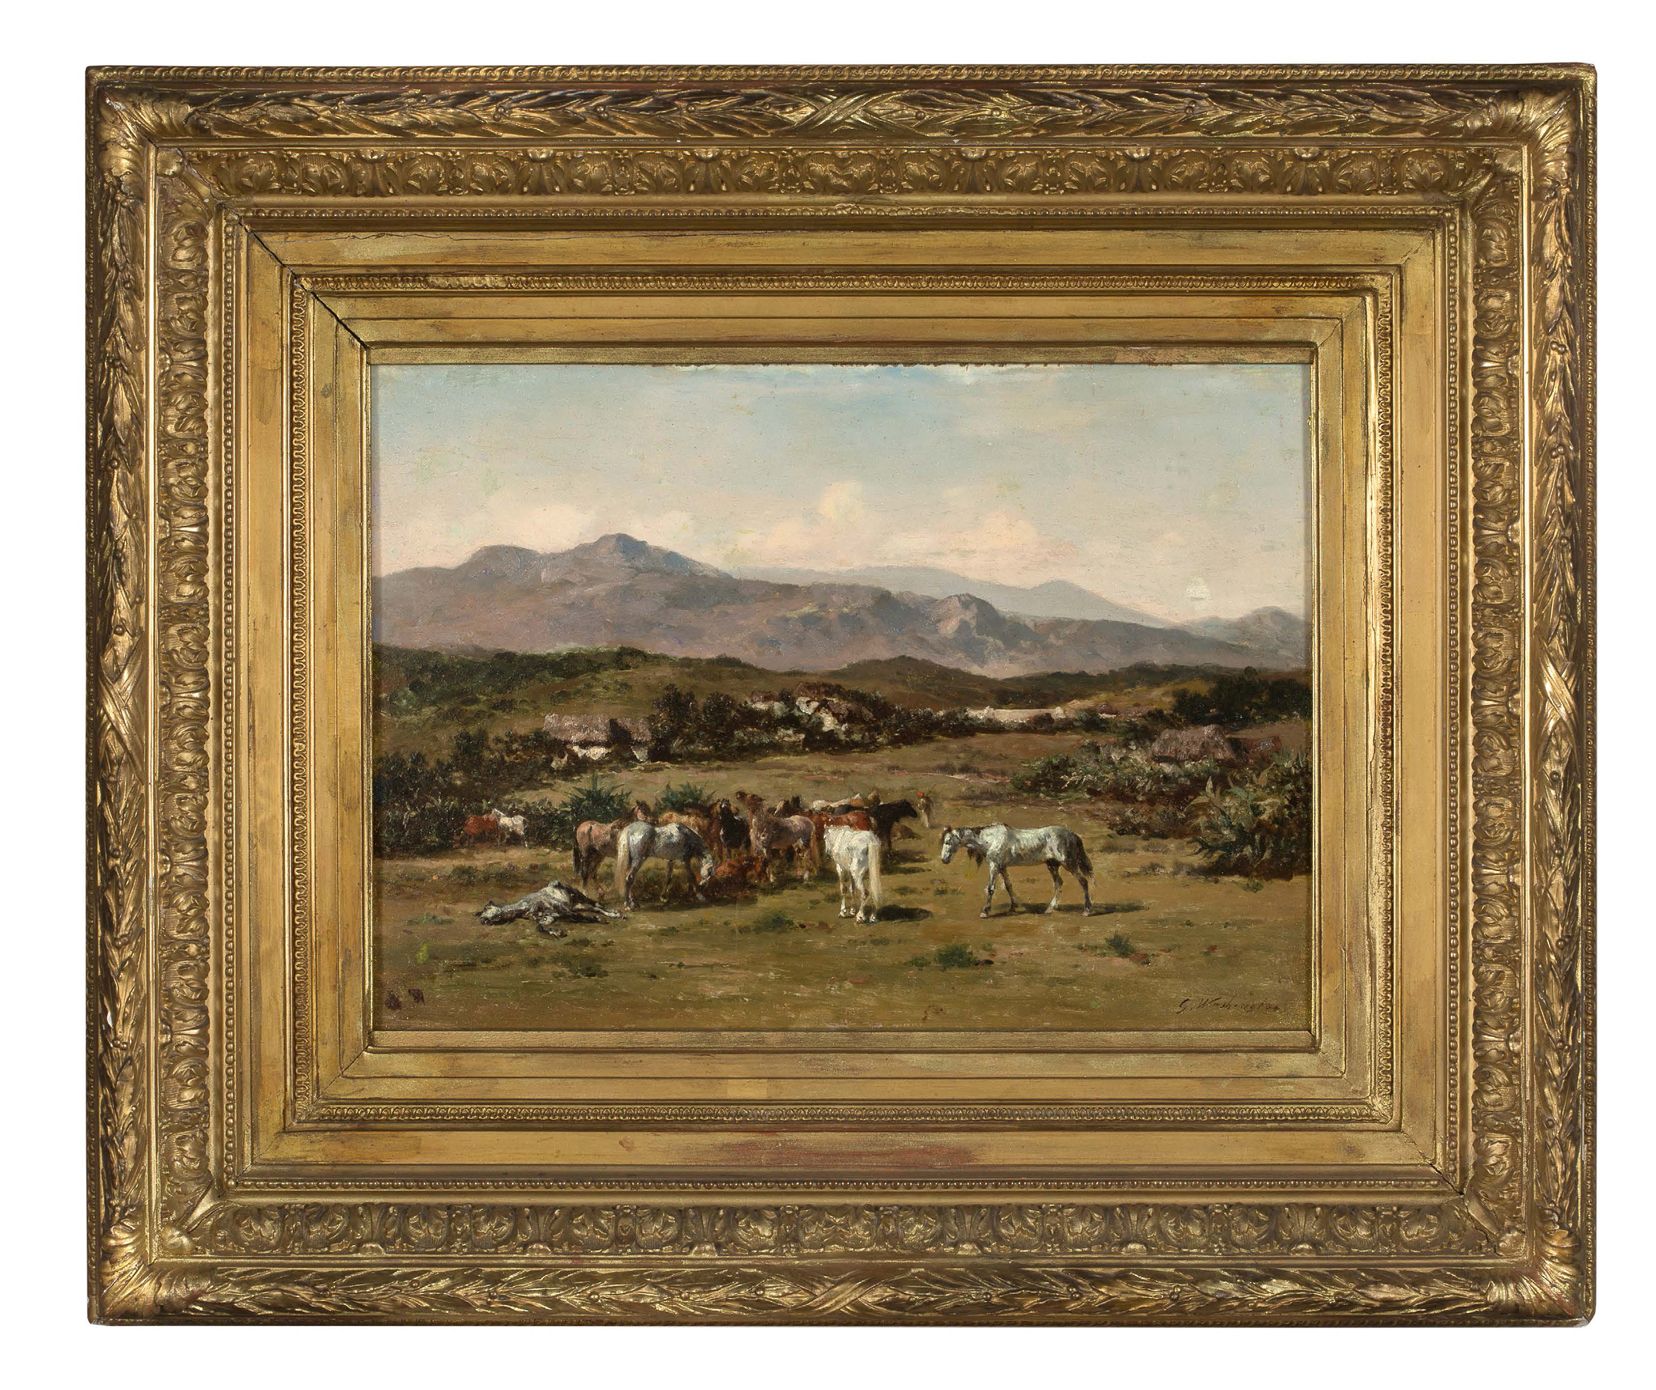 GEORGES WASHINGTON (1827 - 1901) 
Chevaux arabes sur une prairie

Oil on panel, &hellip;